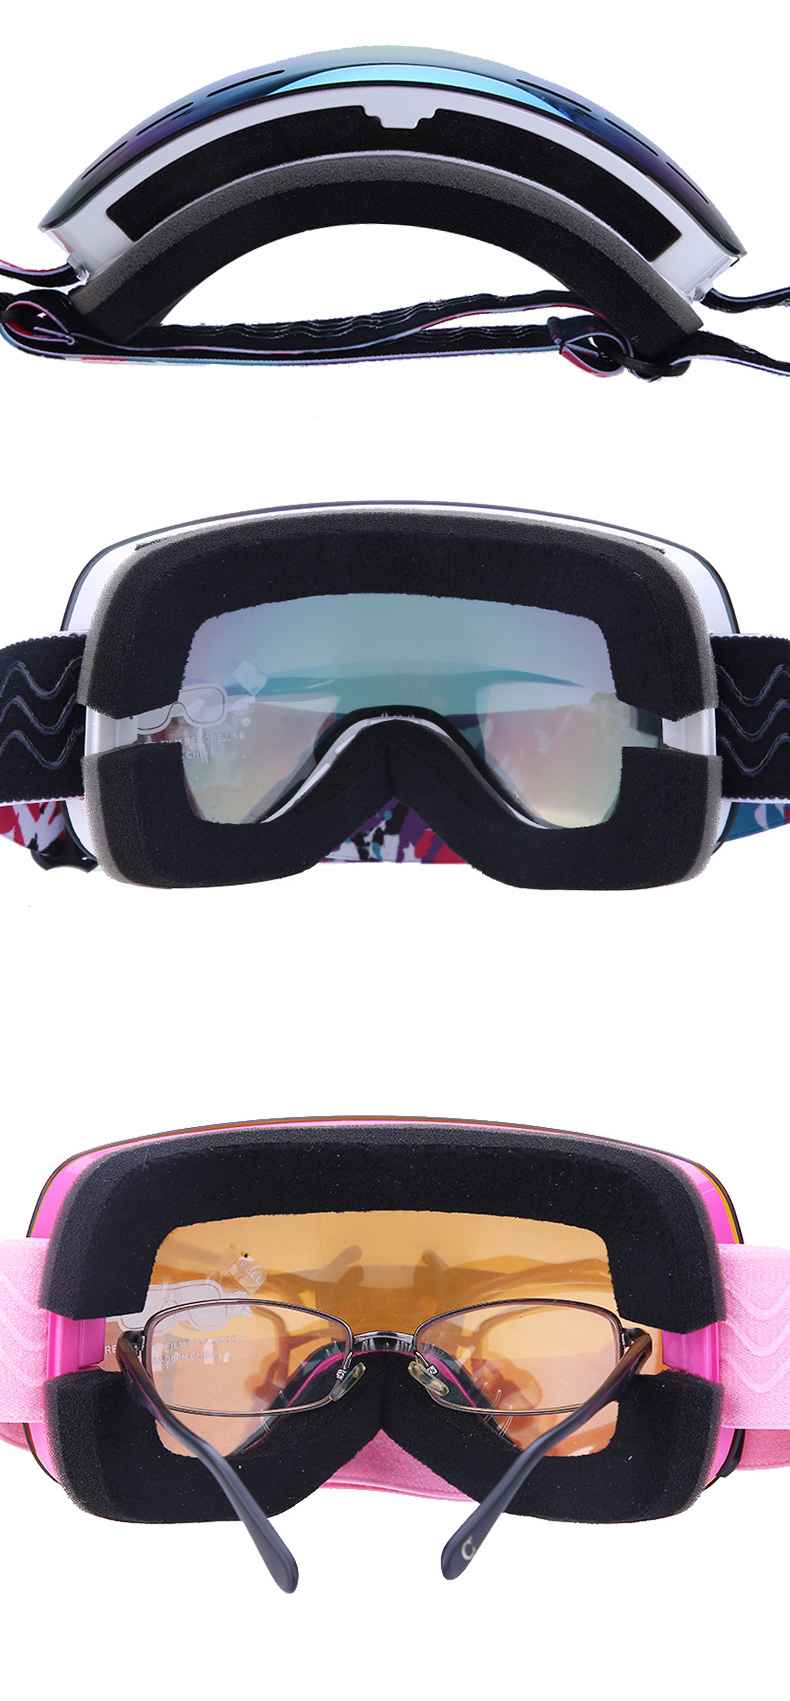 KALOAD-H003-Ski-Goggles-Double-Lens-Anti-Fog-Spherical--Men-Women-Unisex-Multicolor-Snow-Glasses-1205605